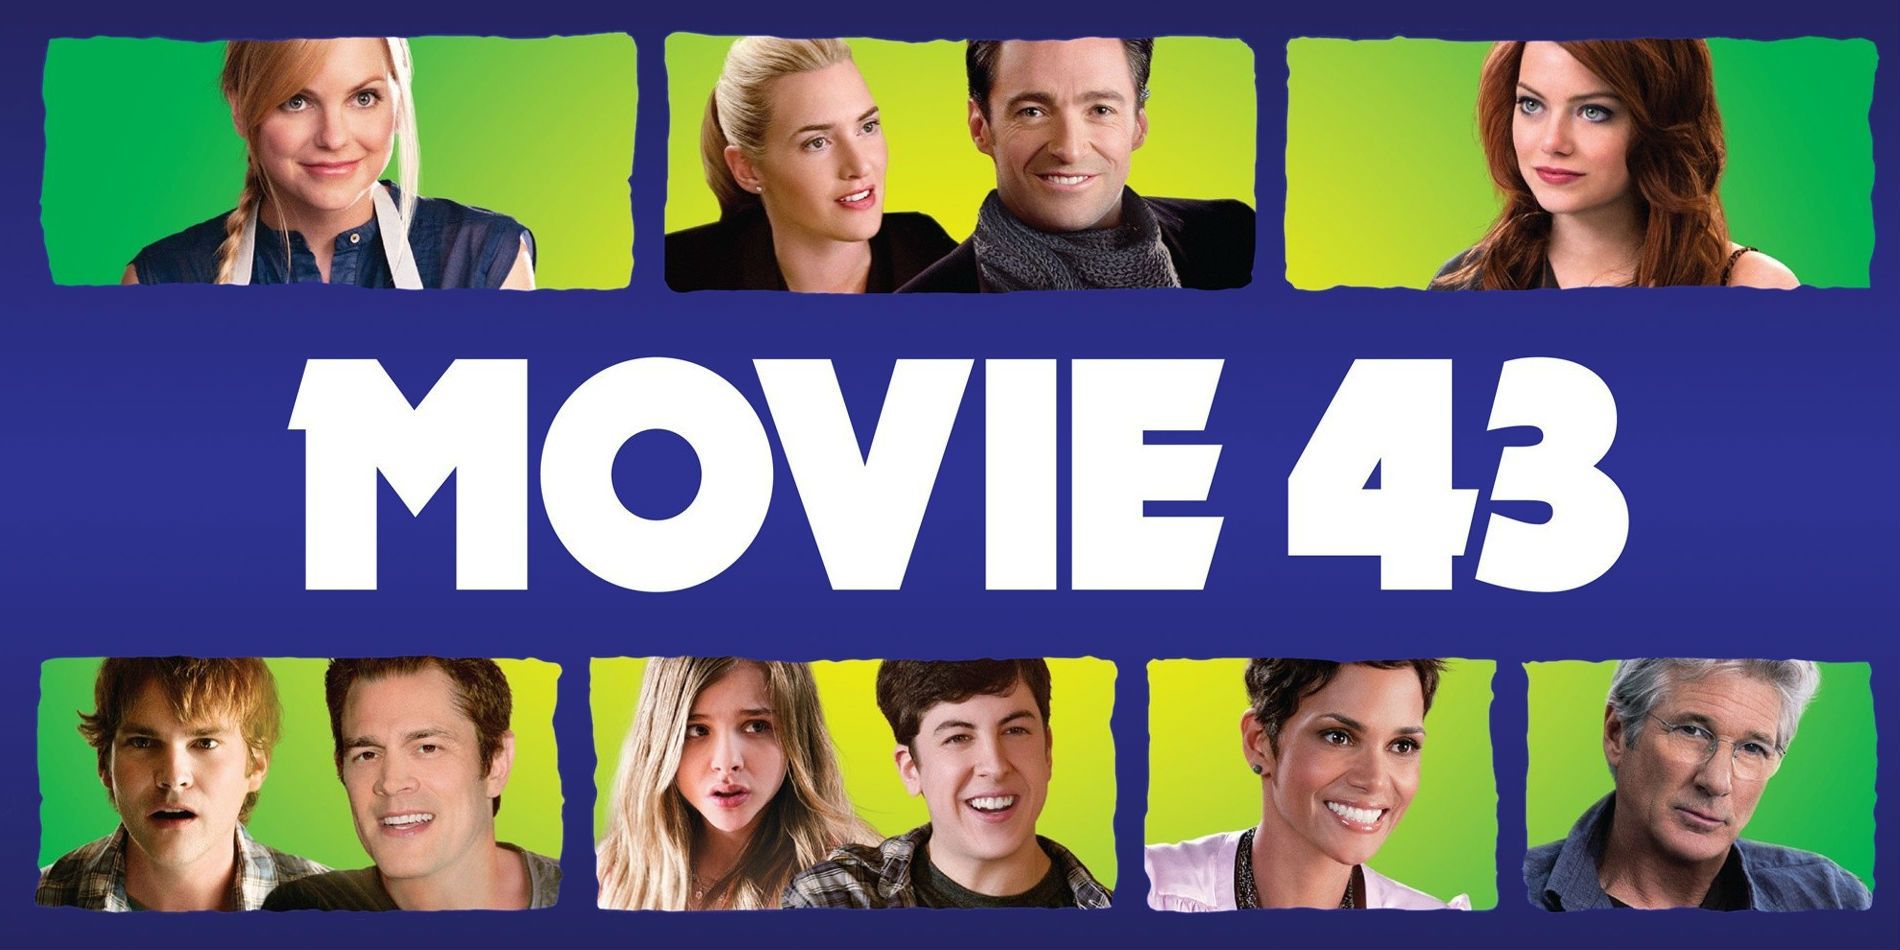 Movie 43 cast image